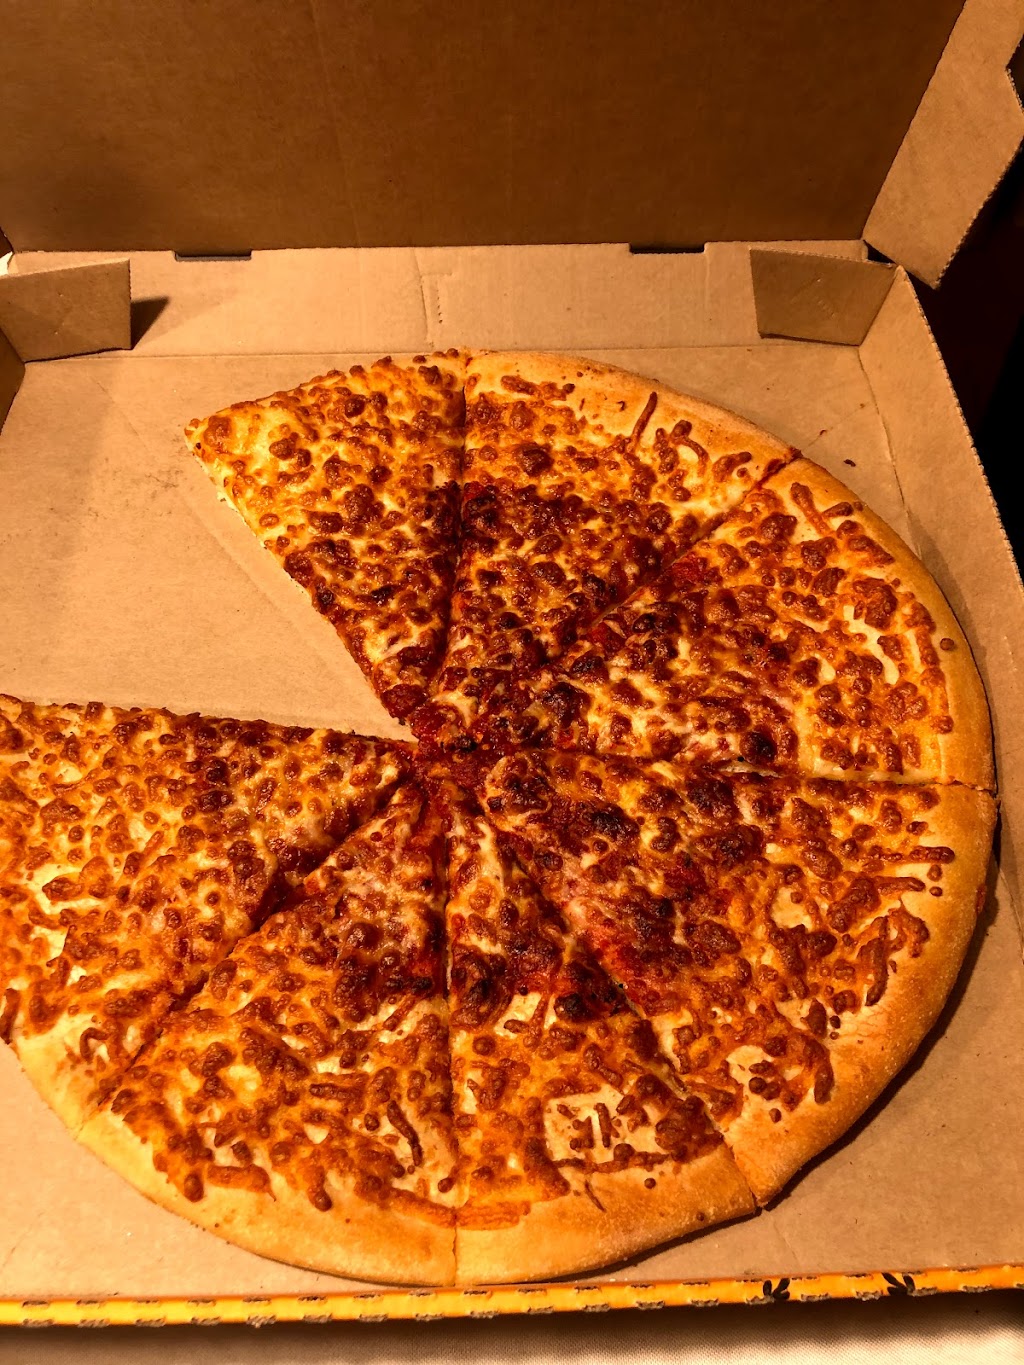 Little Caesars Pizza | 2500 Foulk Rd, Wilmington, DE 19810 | Phone: (302) 746-7494